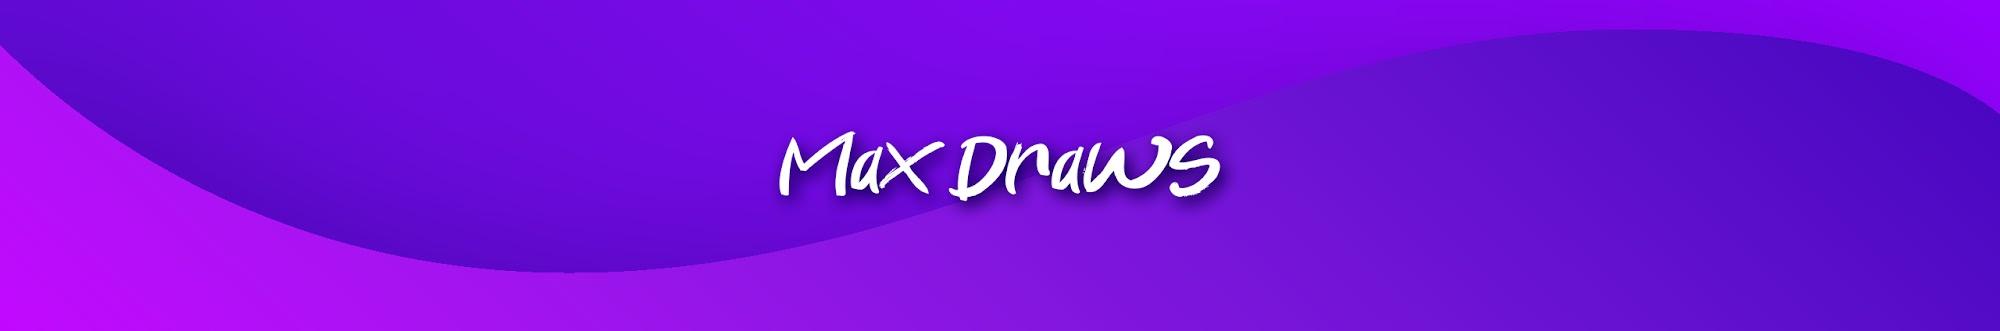 Max Draws